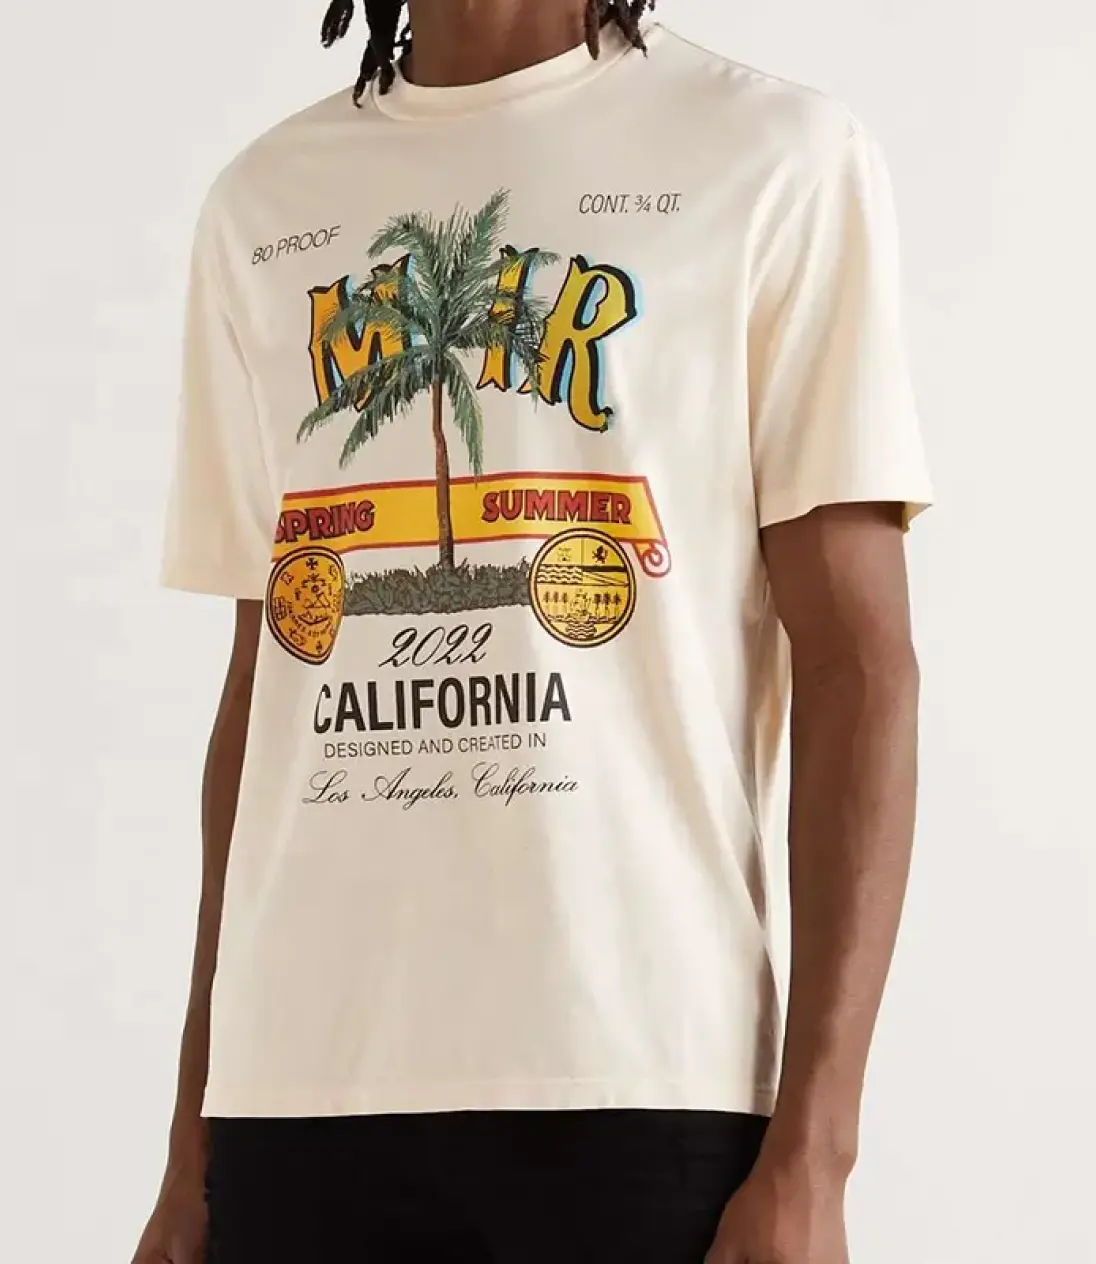 Tshirt üith California print